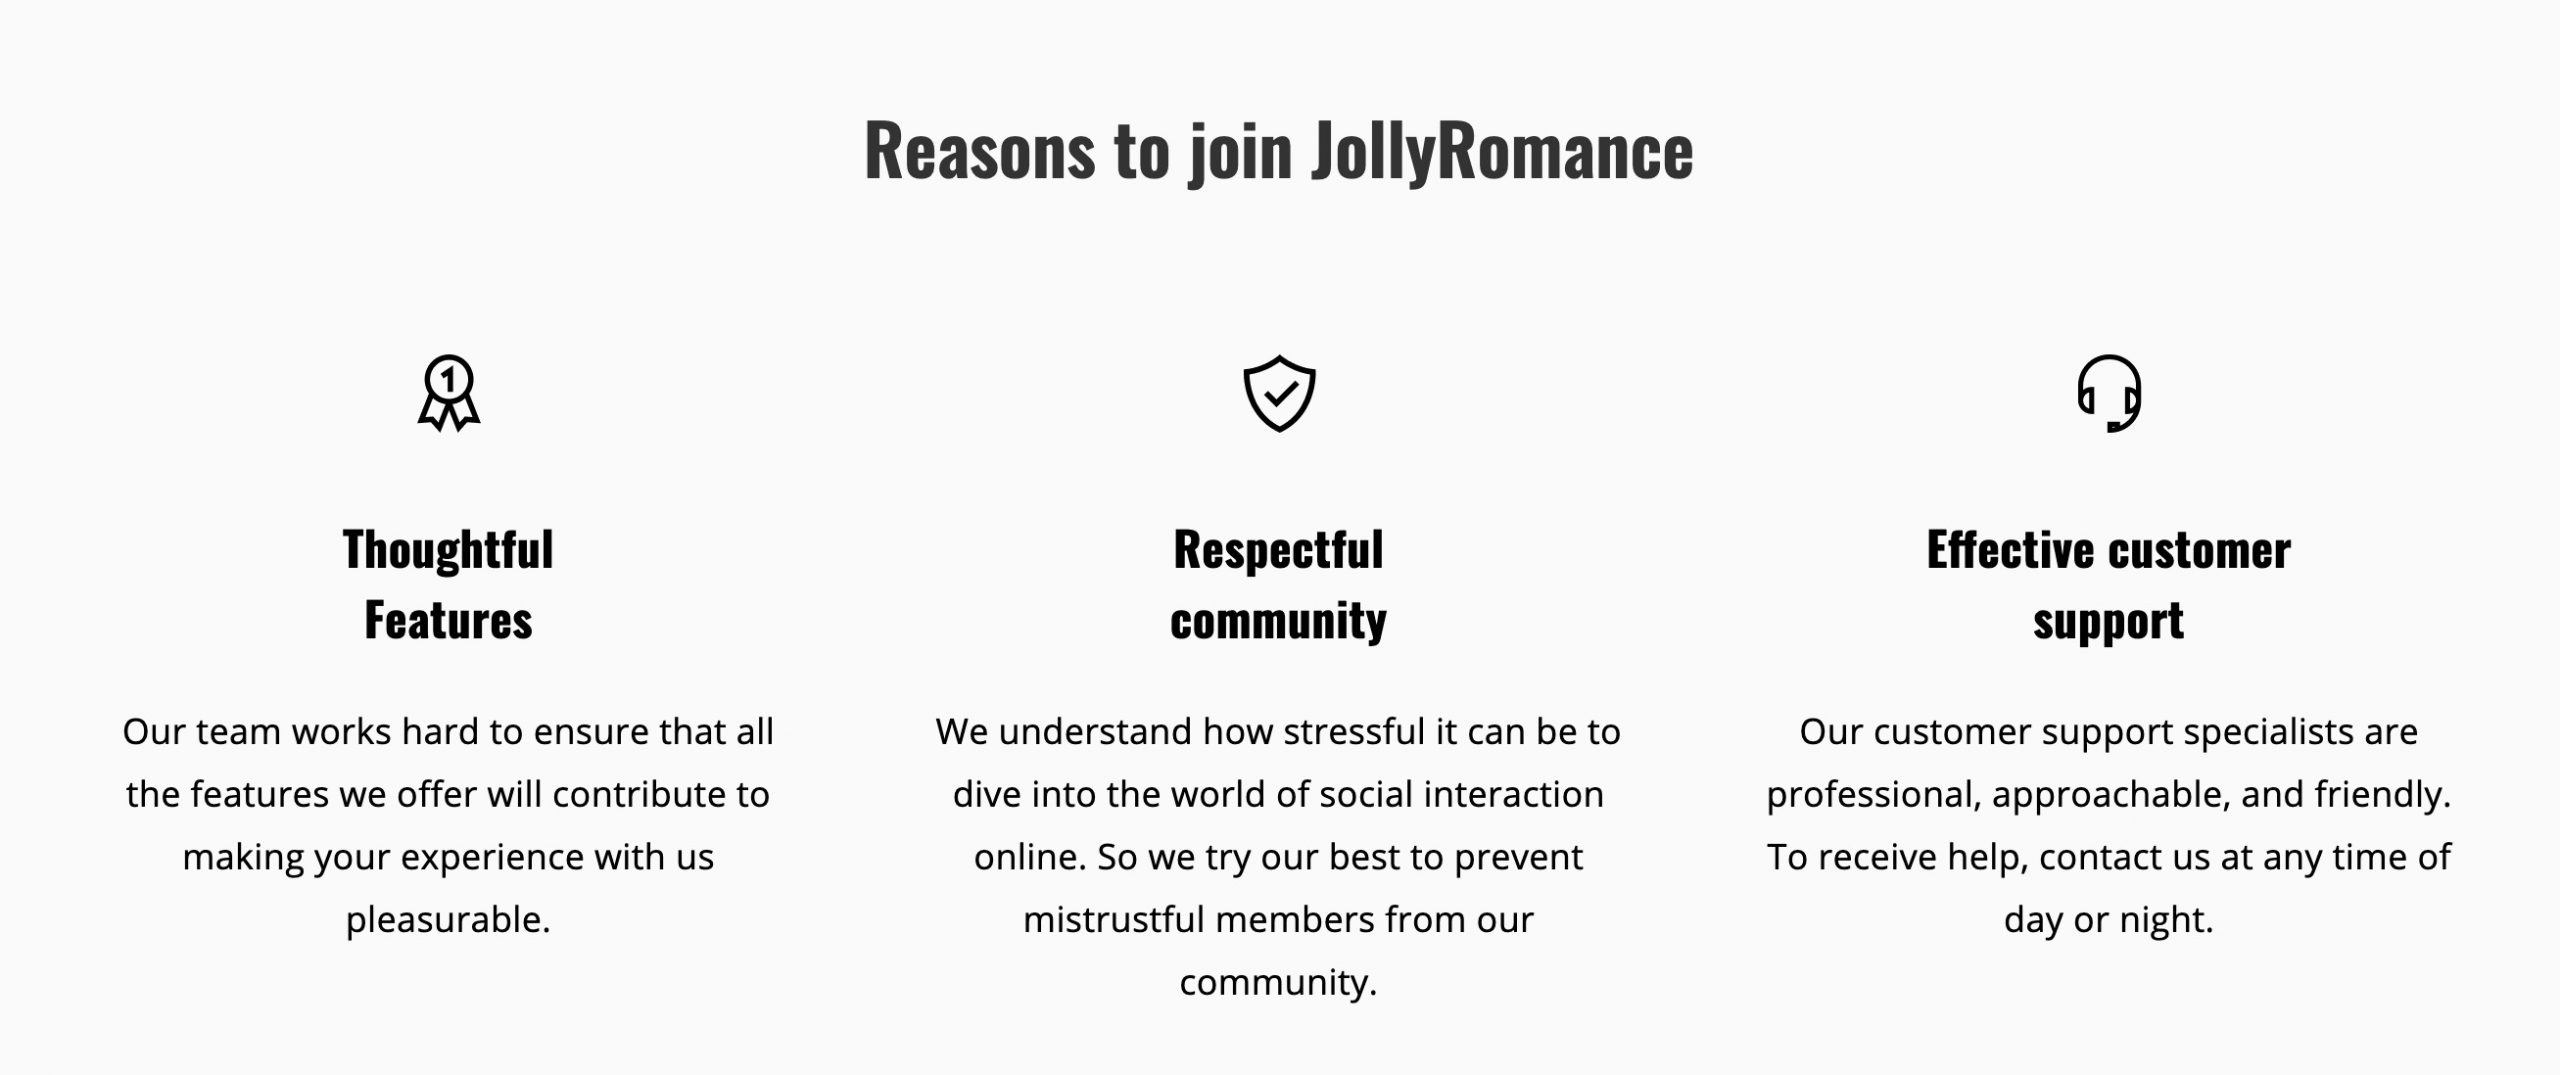 JollyRomance reasons to join